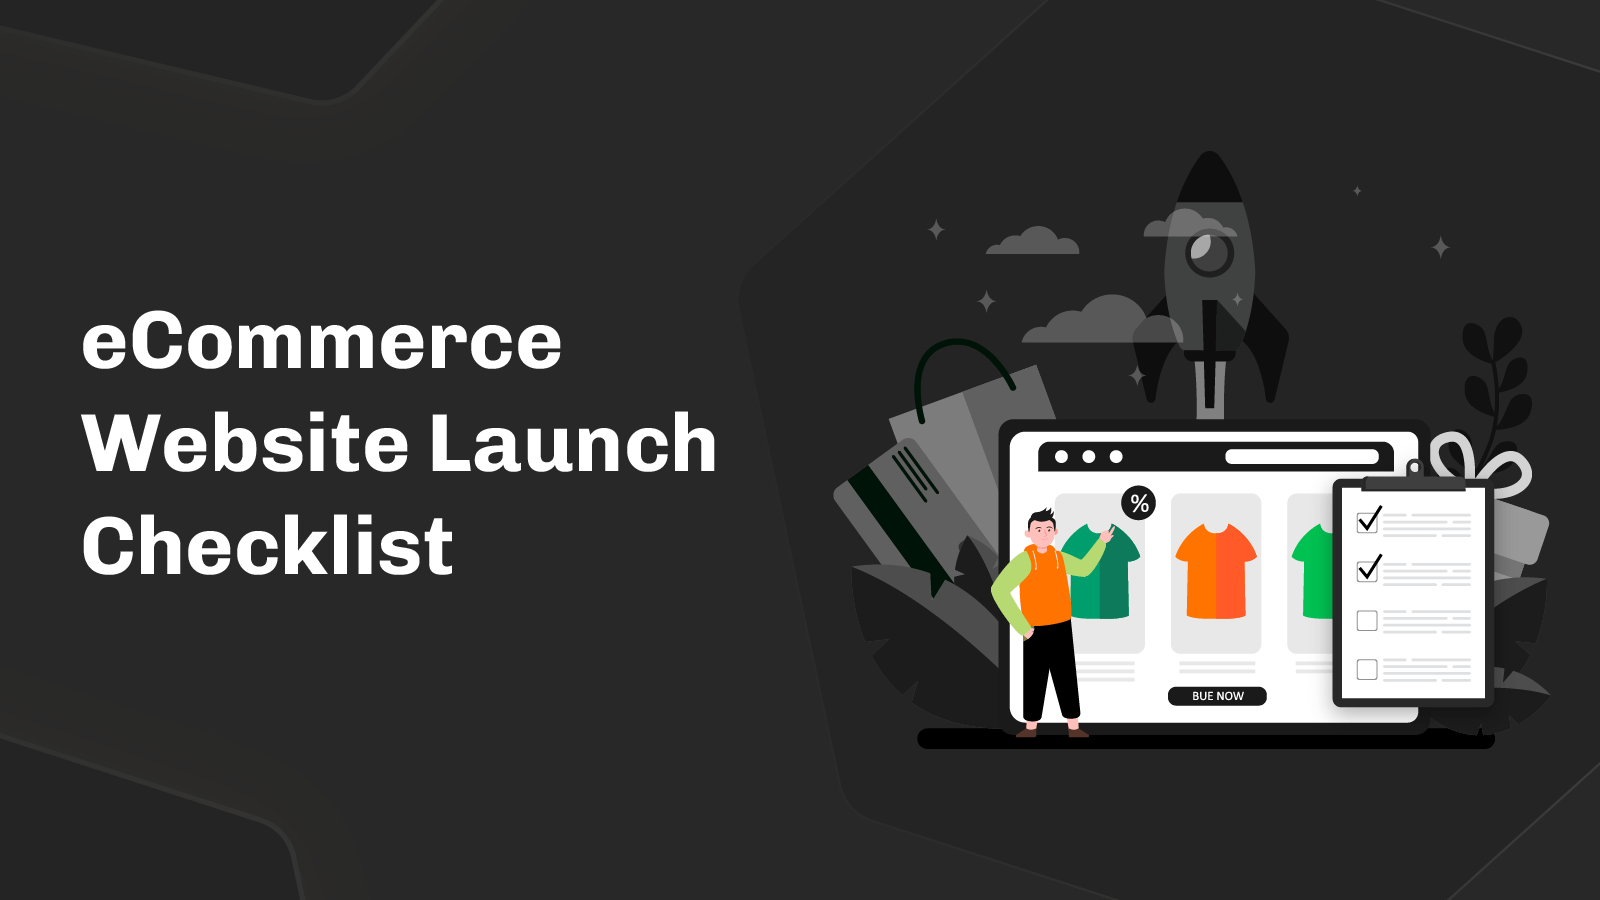 eCommerce website launch checklist